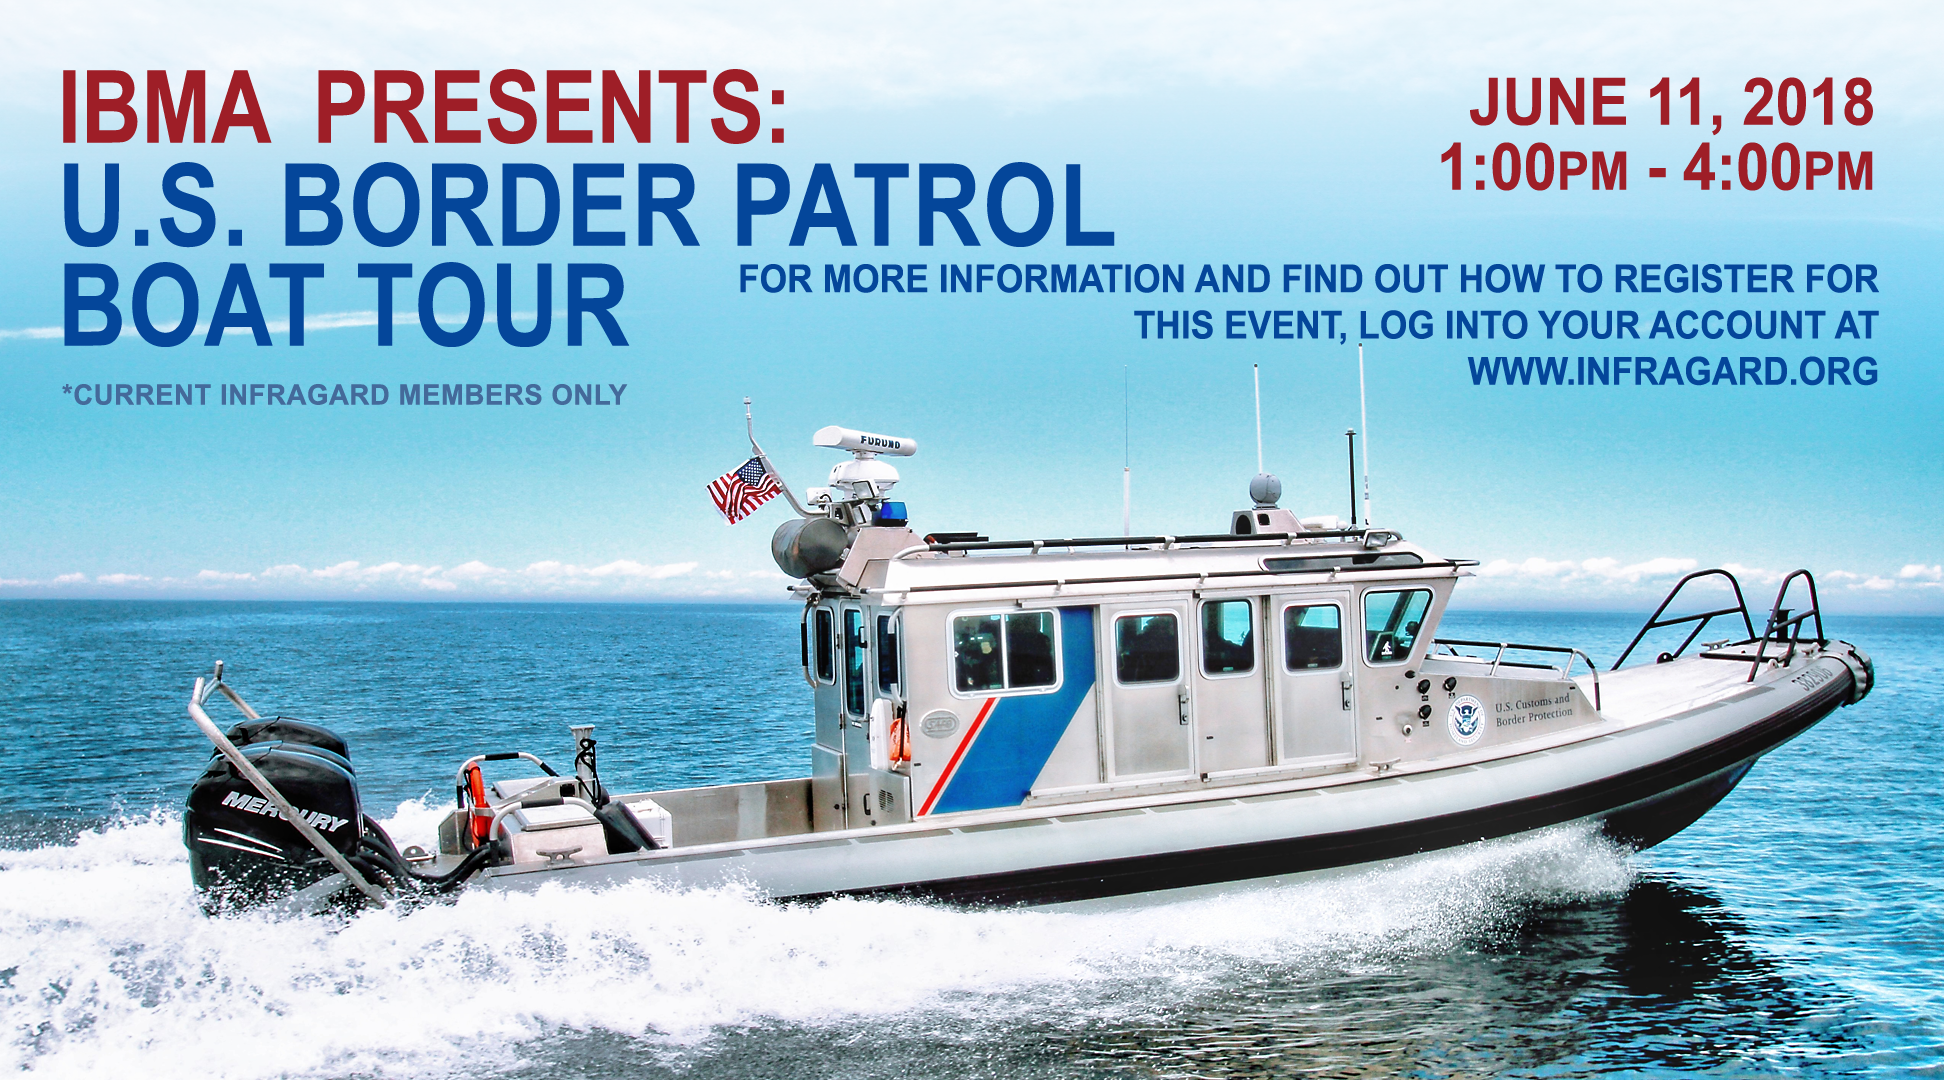  U.S. Border Patrol Boat Tour